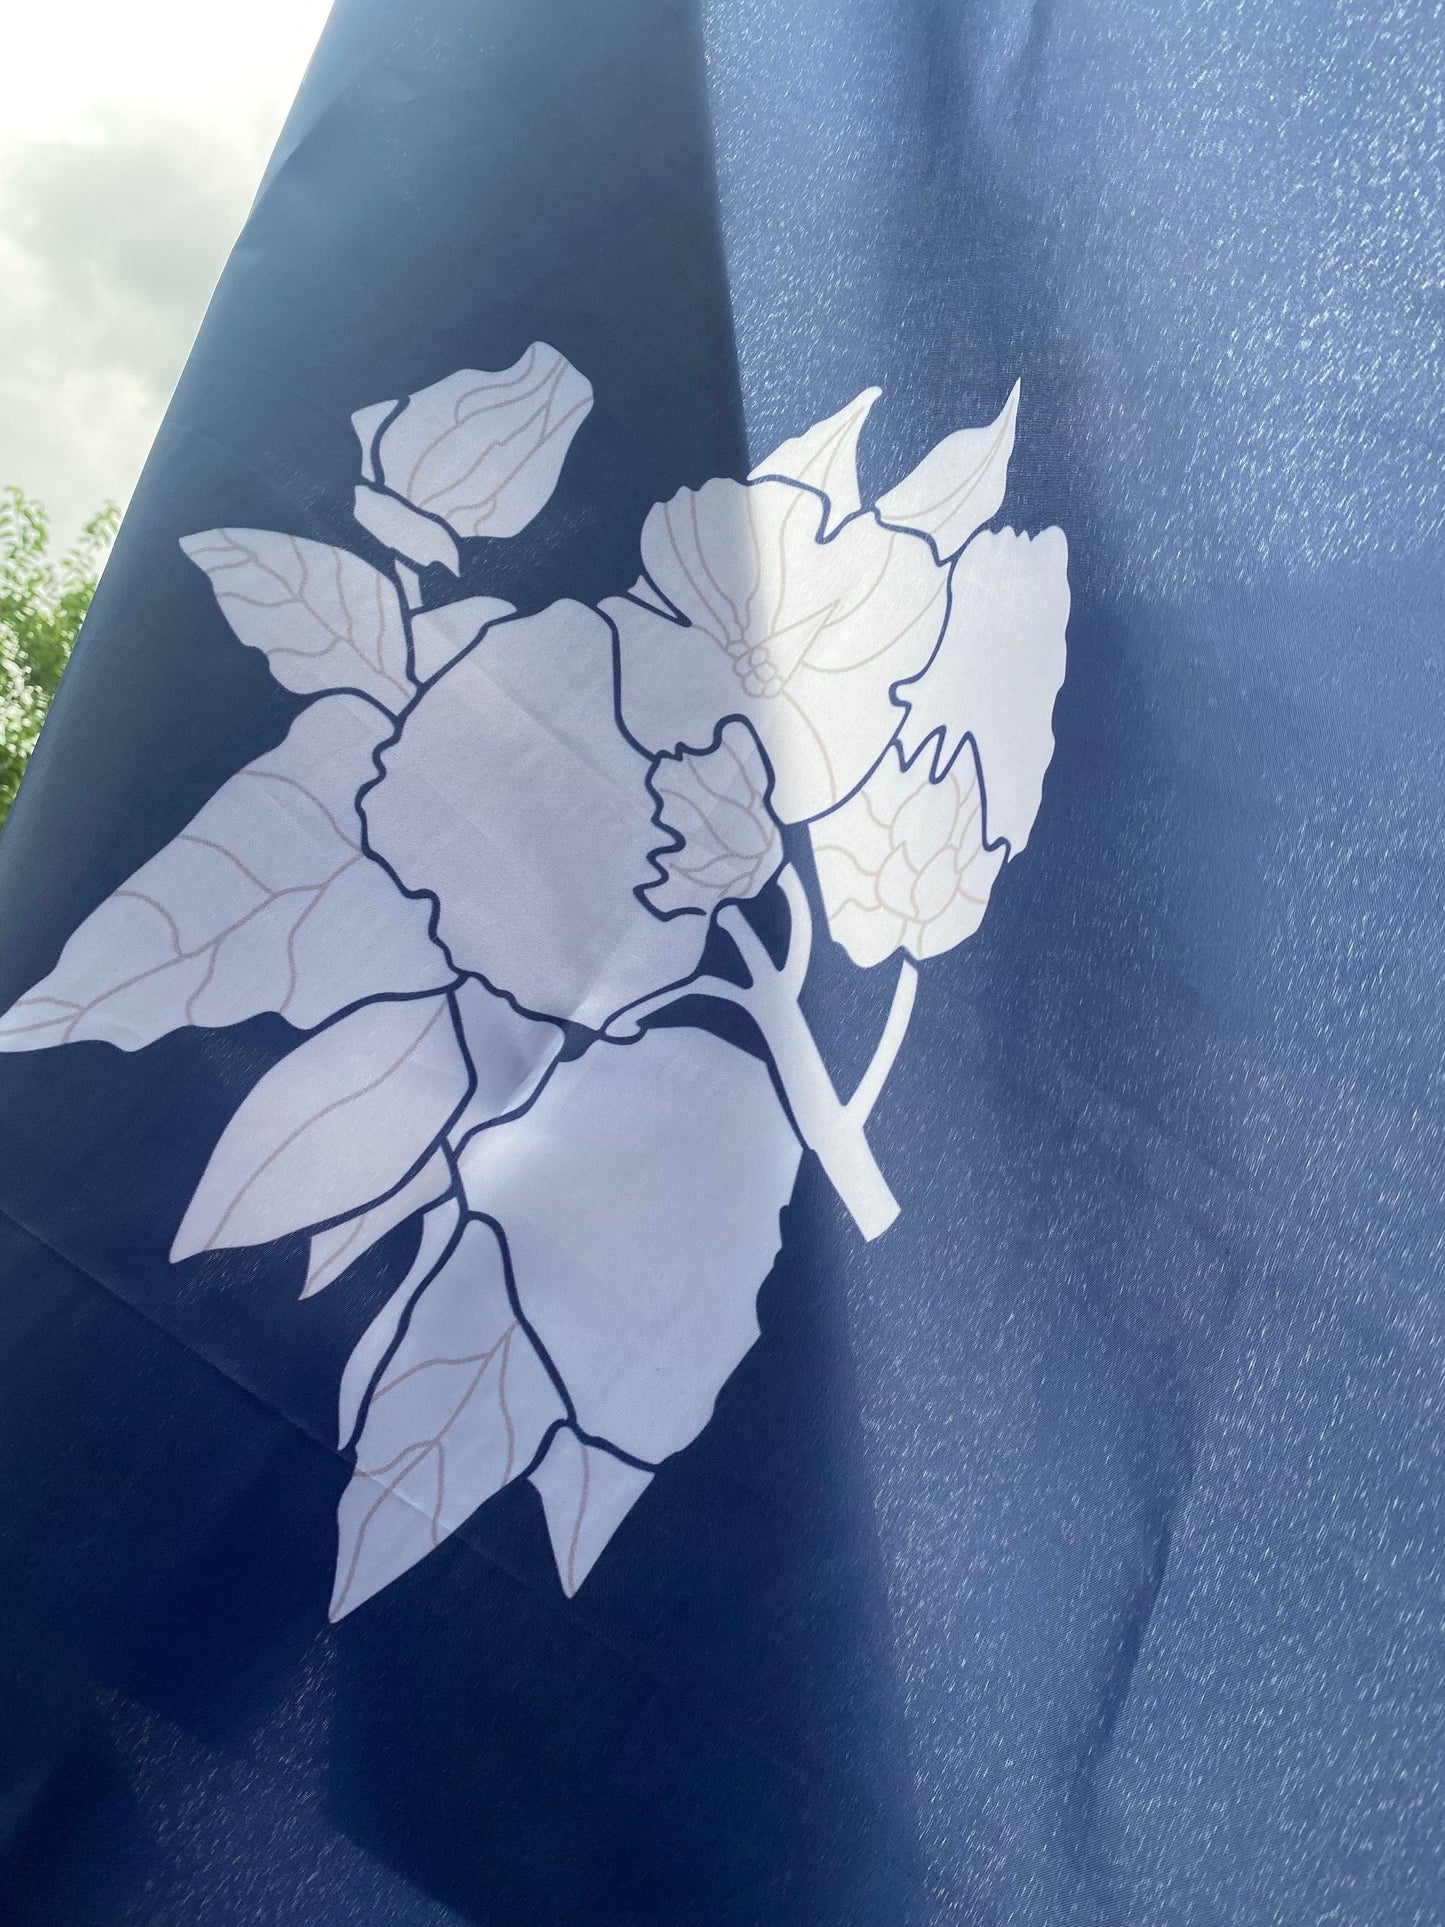 Saint Augustine Blues - Third Florida Garden Flag